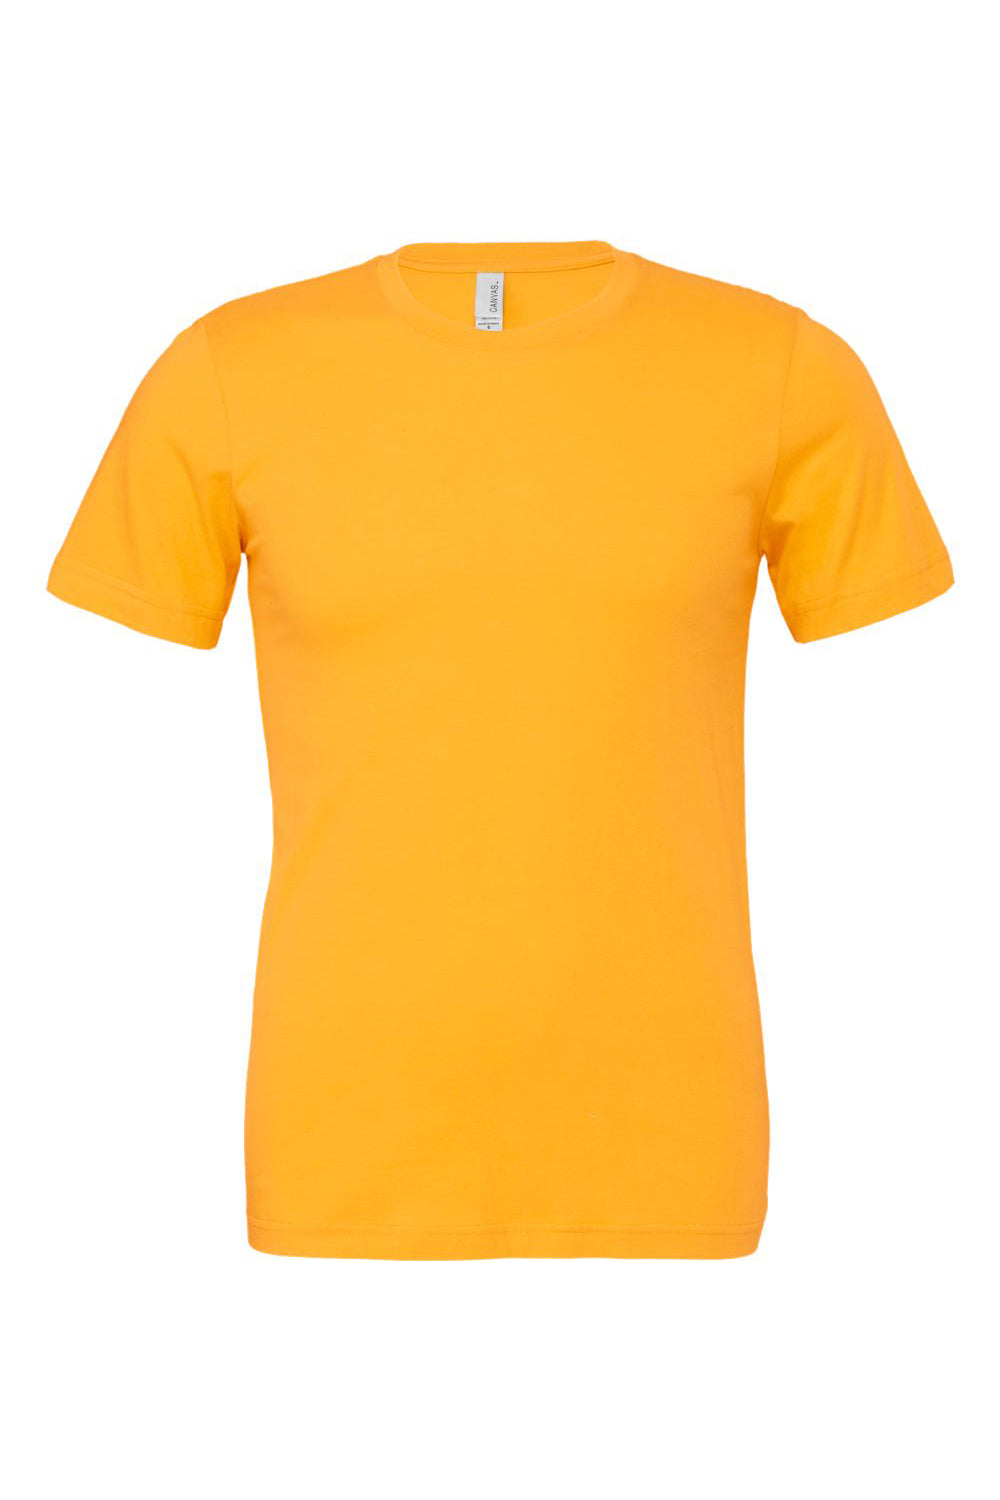 Bella + Canvas BC3001/3001C Mens Jersey Short Sleeve Crewneck T-Shirt Gold Flat Front